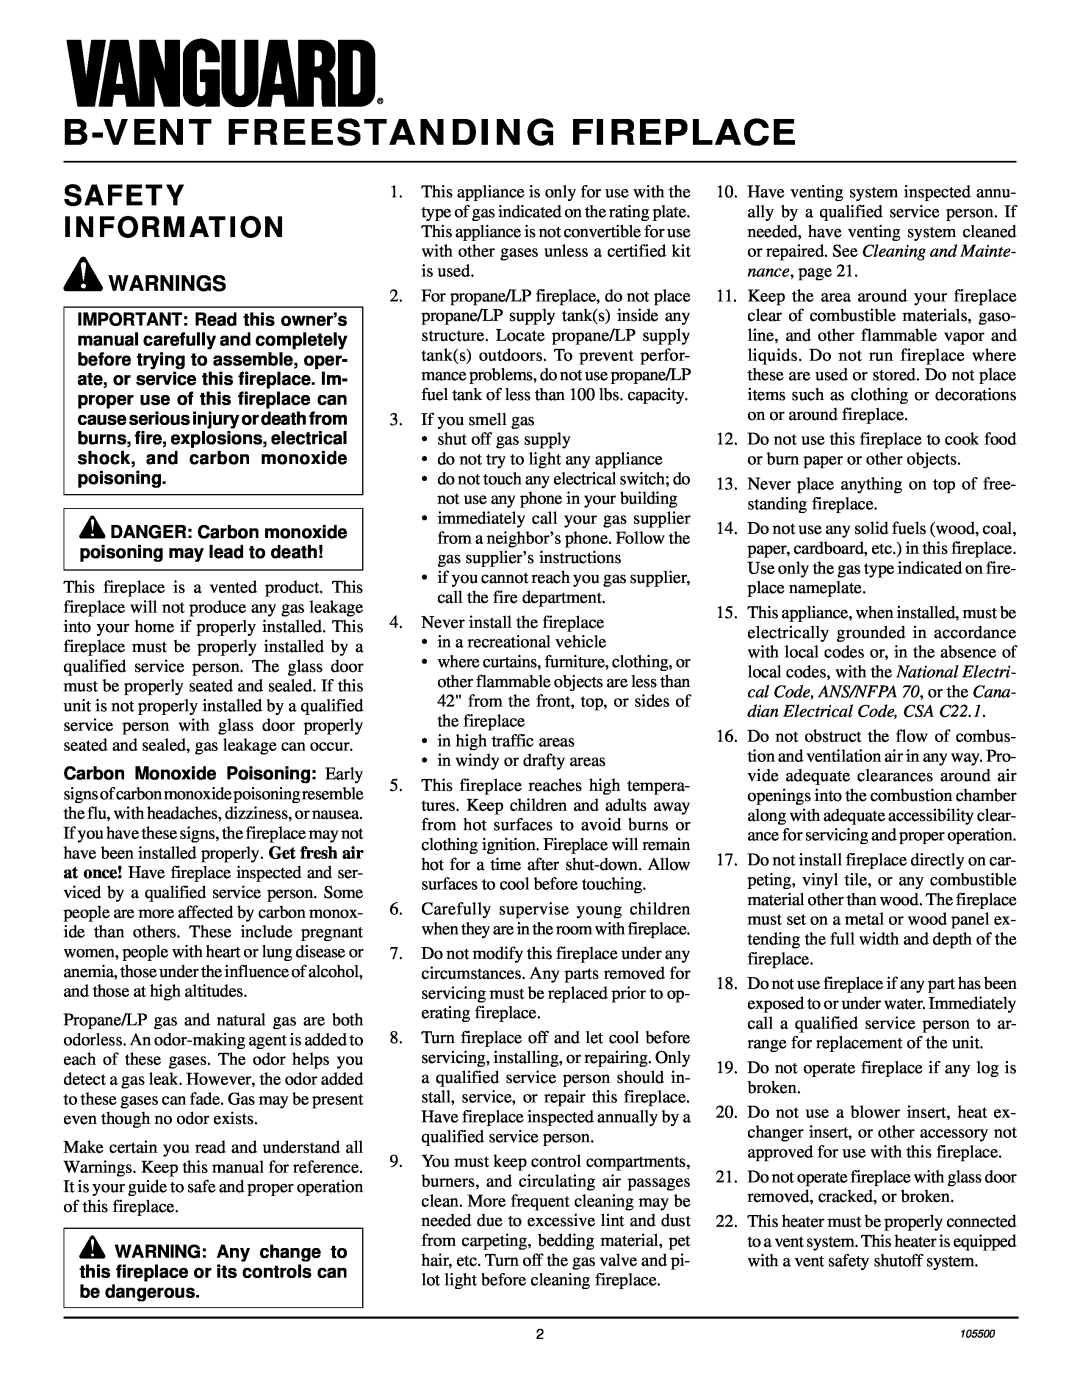 Desa SBVBP(A), SBVBN(A) installation manual B-Ventfreestanding Fireplace, Safety Information, Warnings 